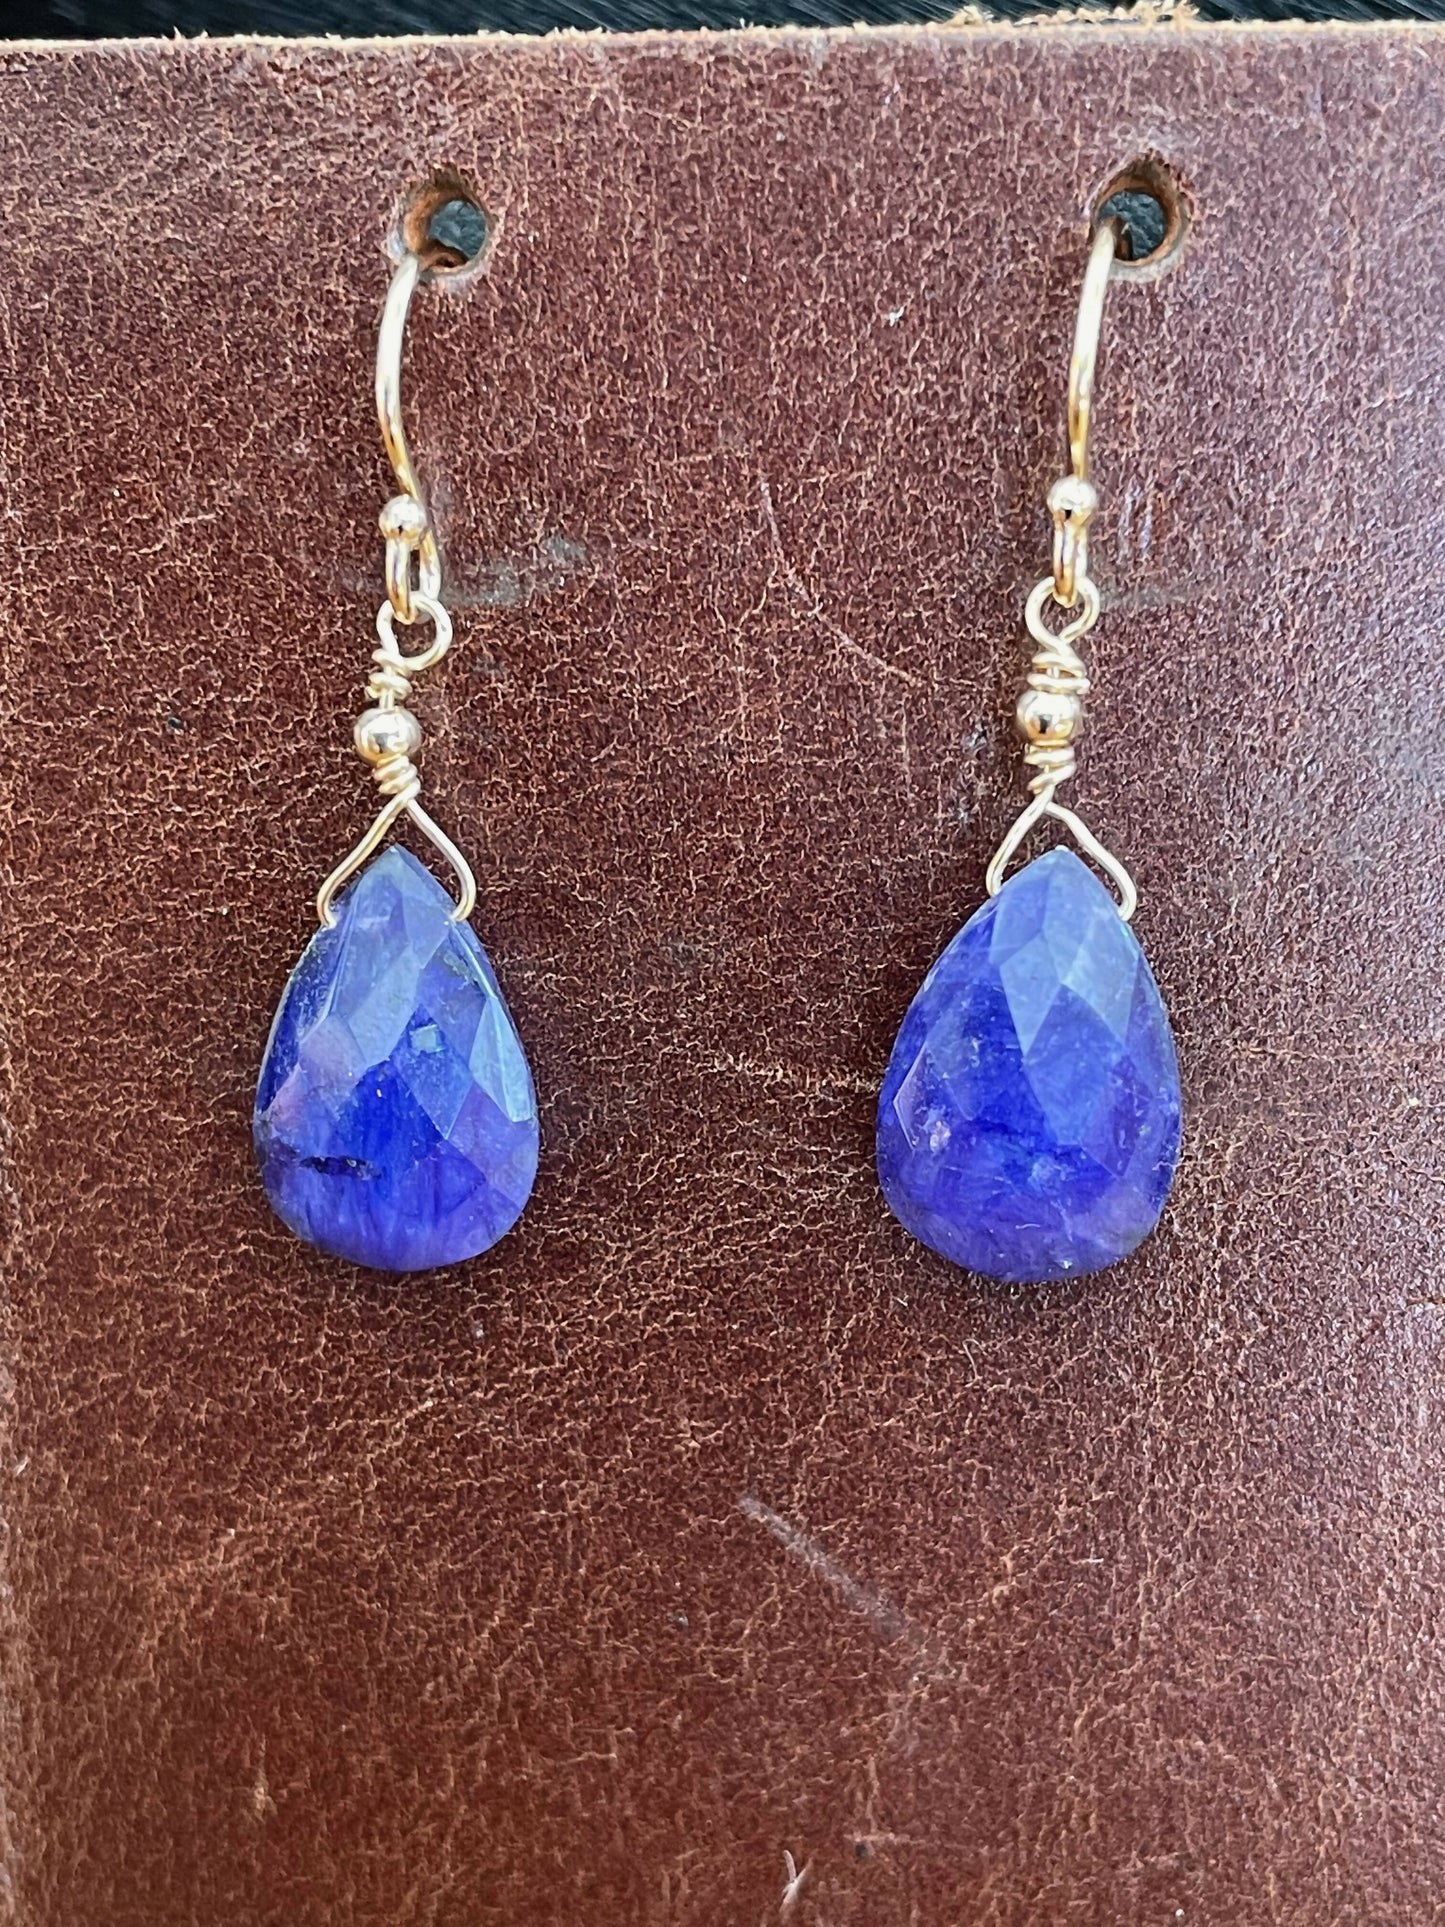 Drops of Goodness - Gemstone Earrings in gold